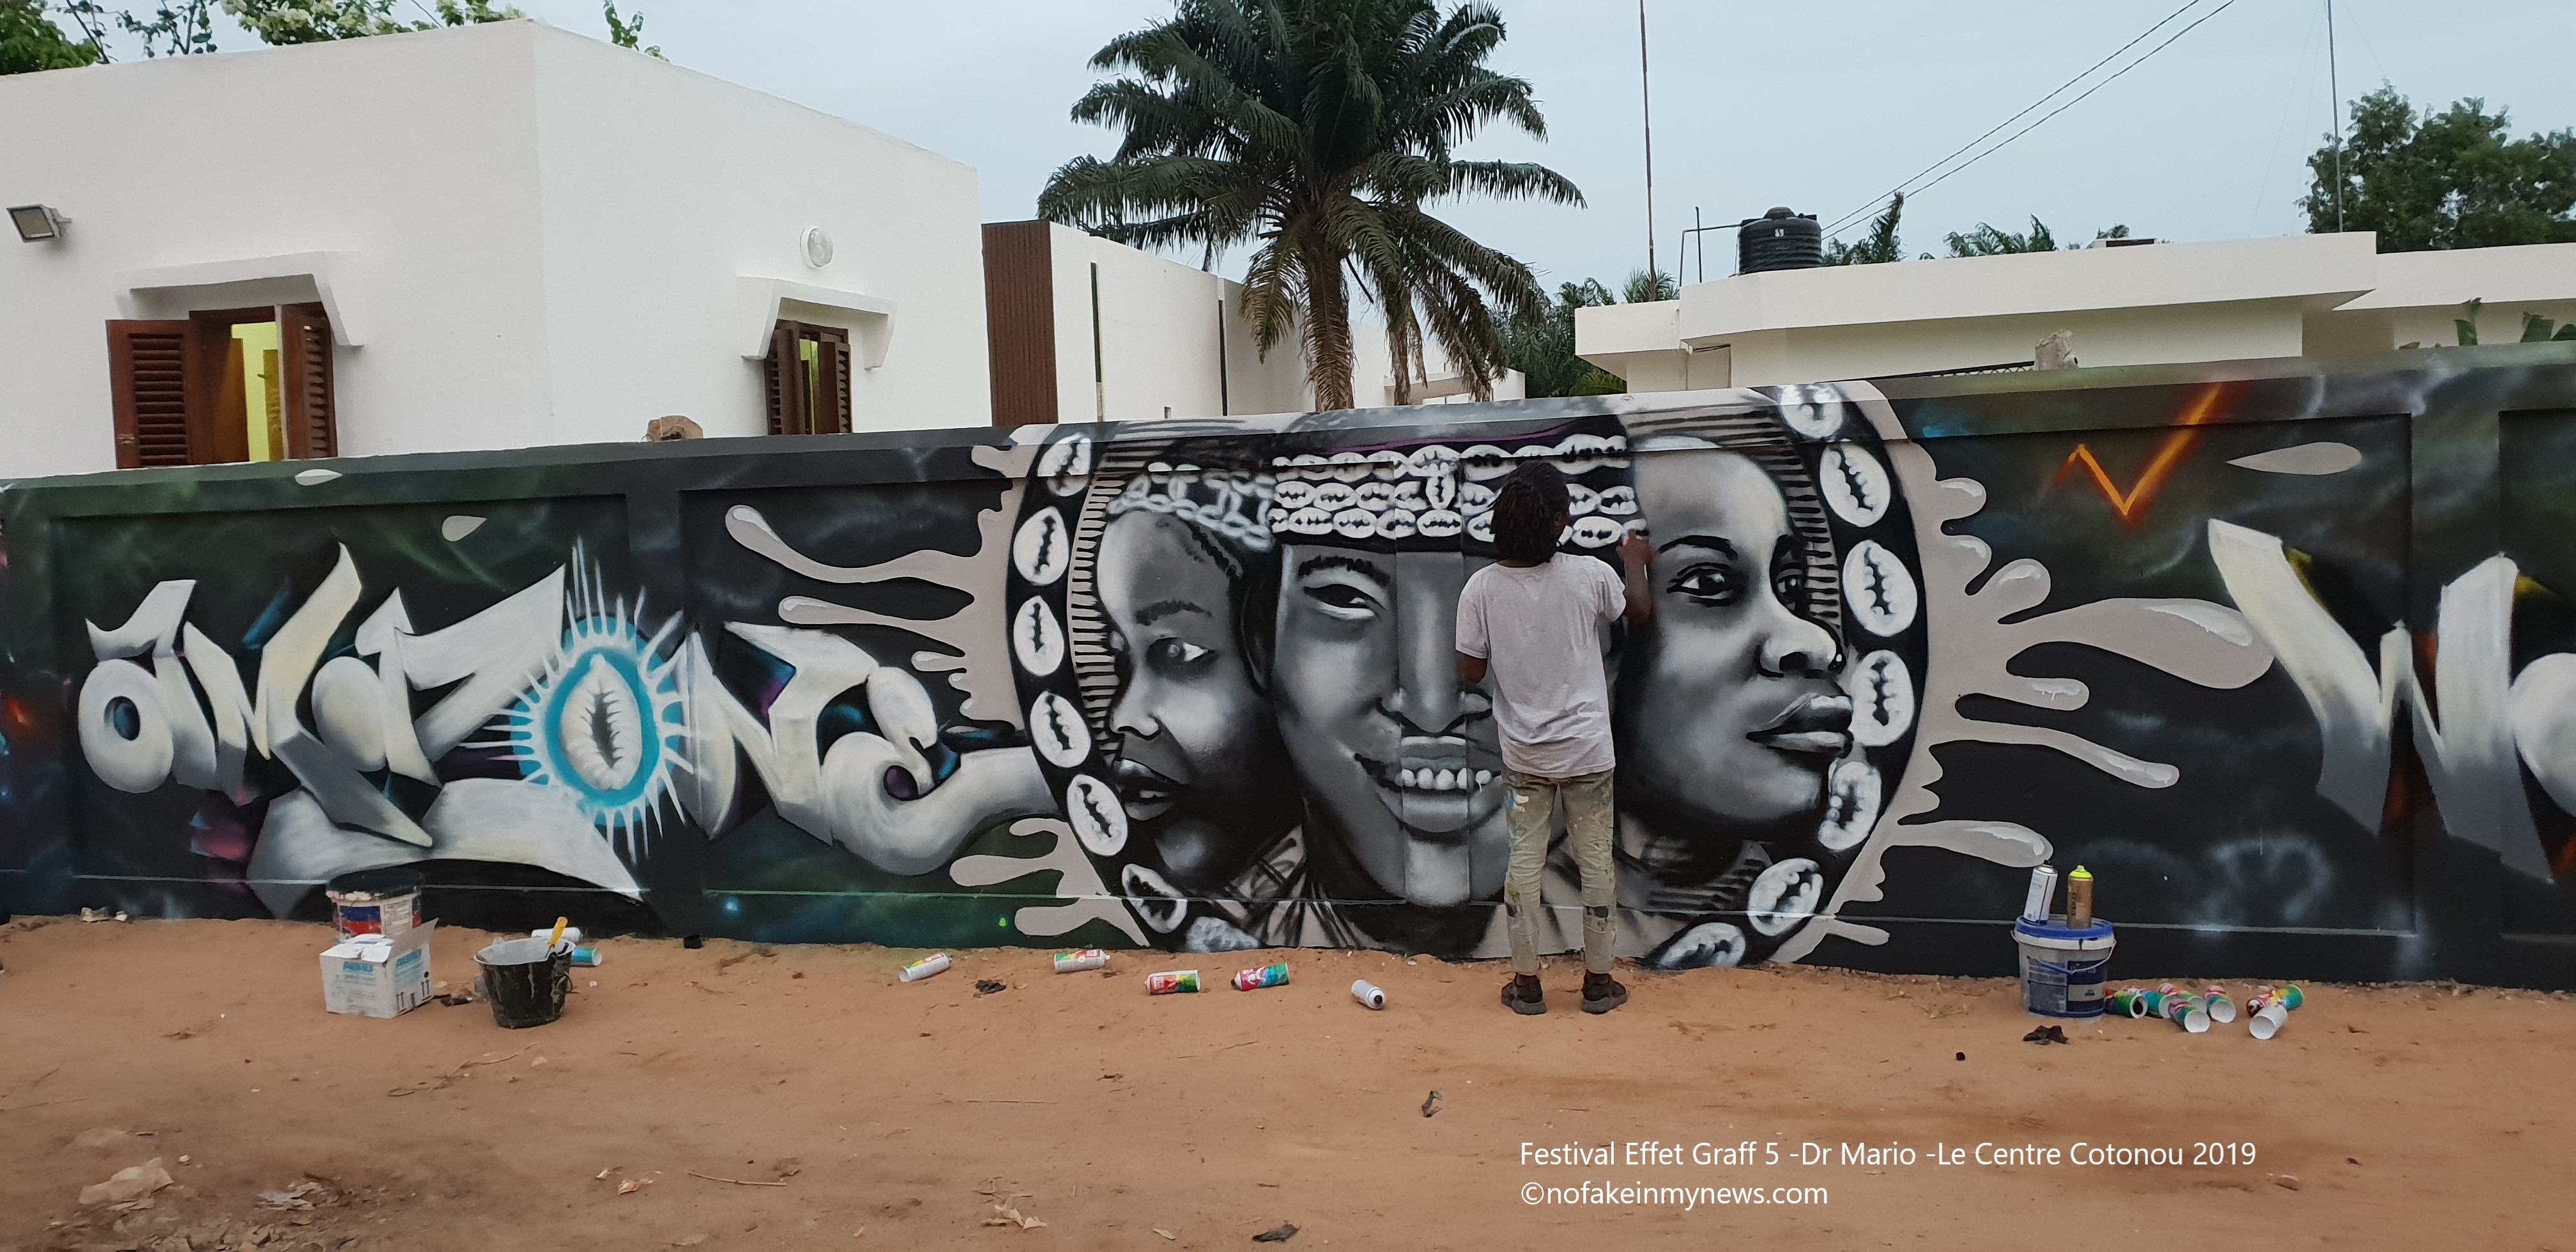 Festival Effet Graff 5 -Dr Mario -Le Centre Cotonou 2019 - ©nofakeinmynews